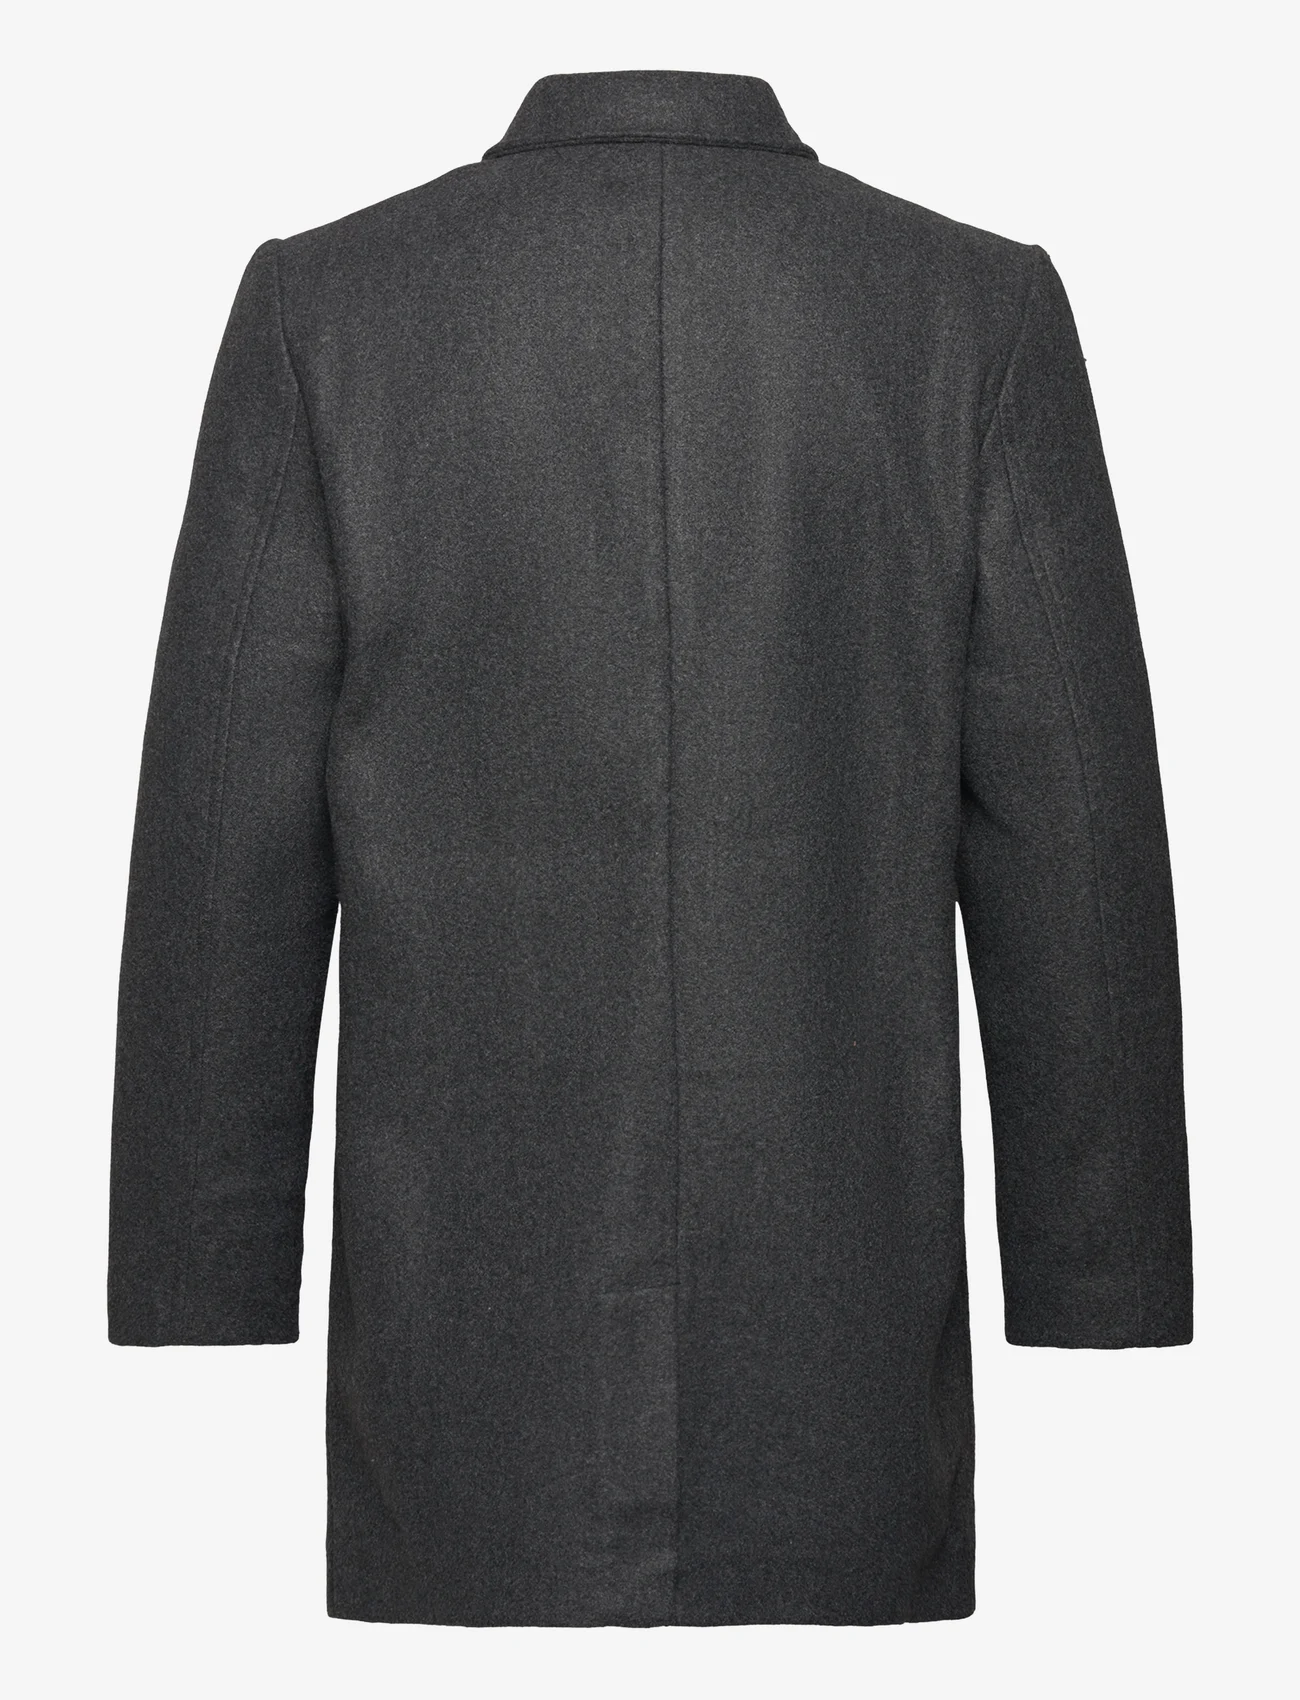 ONLY & SONS - ONSADAM COAT OTW VD - winter jackets - dark grey melange - 1